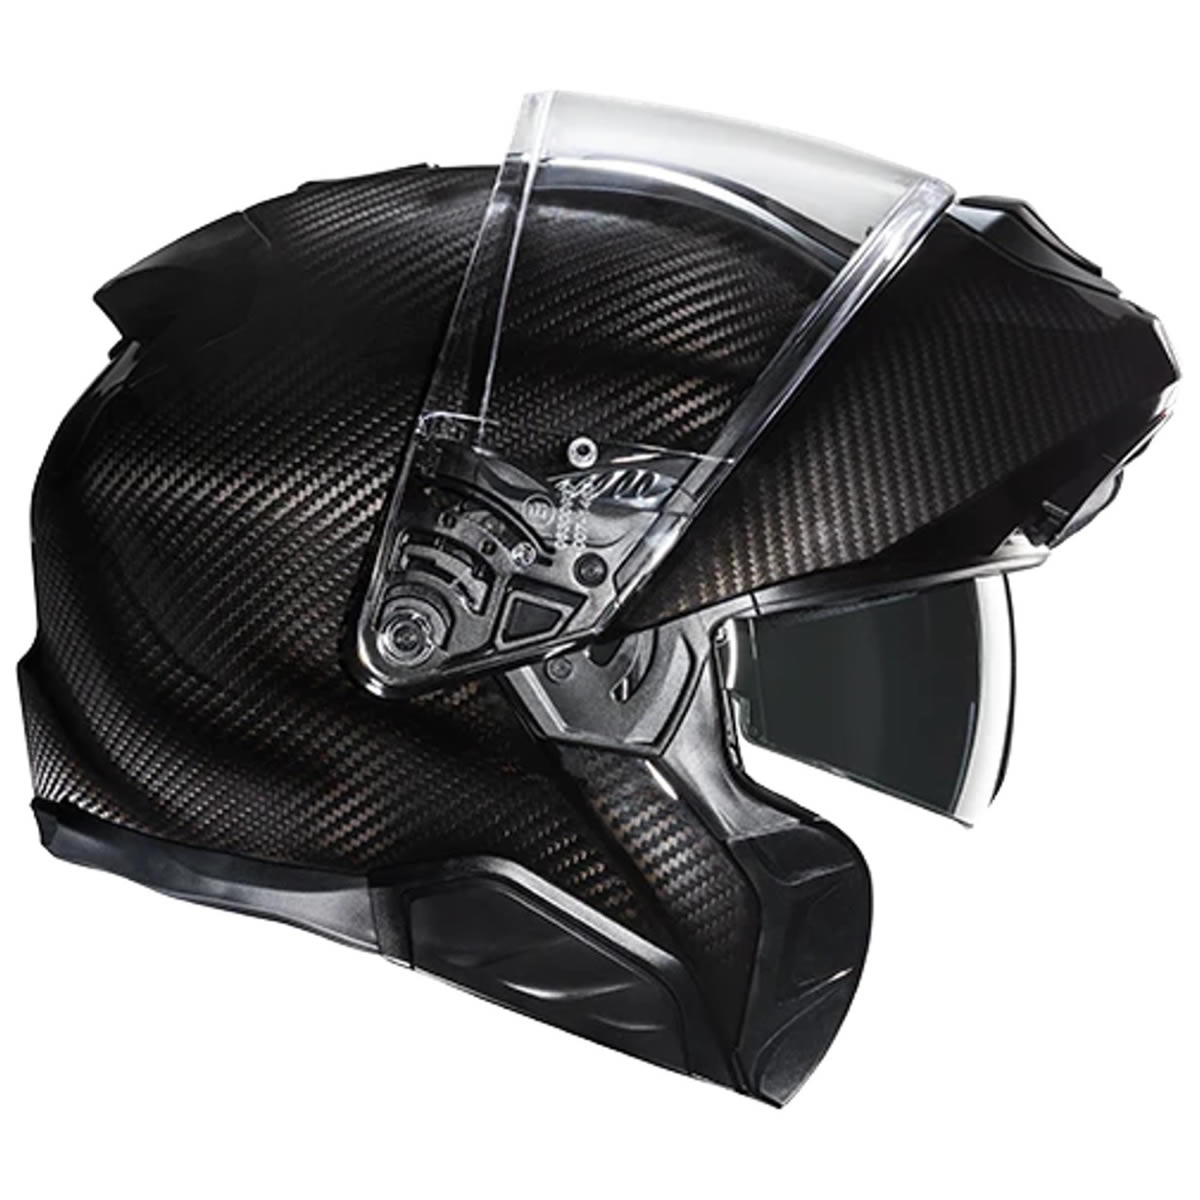 HJC RPHA 91 Carbon Helm, schwarz